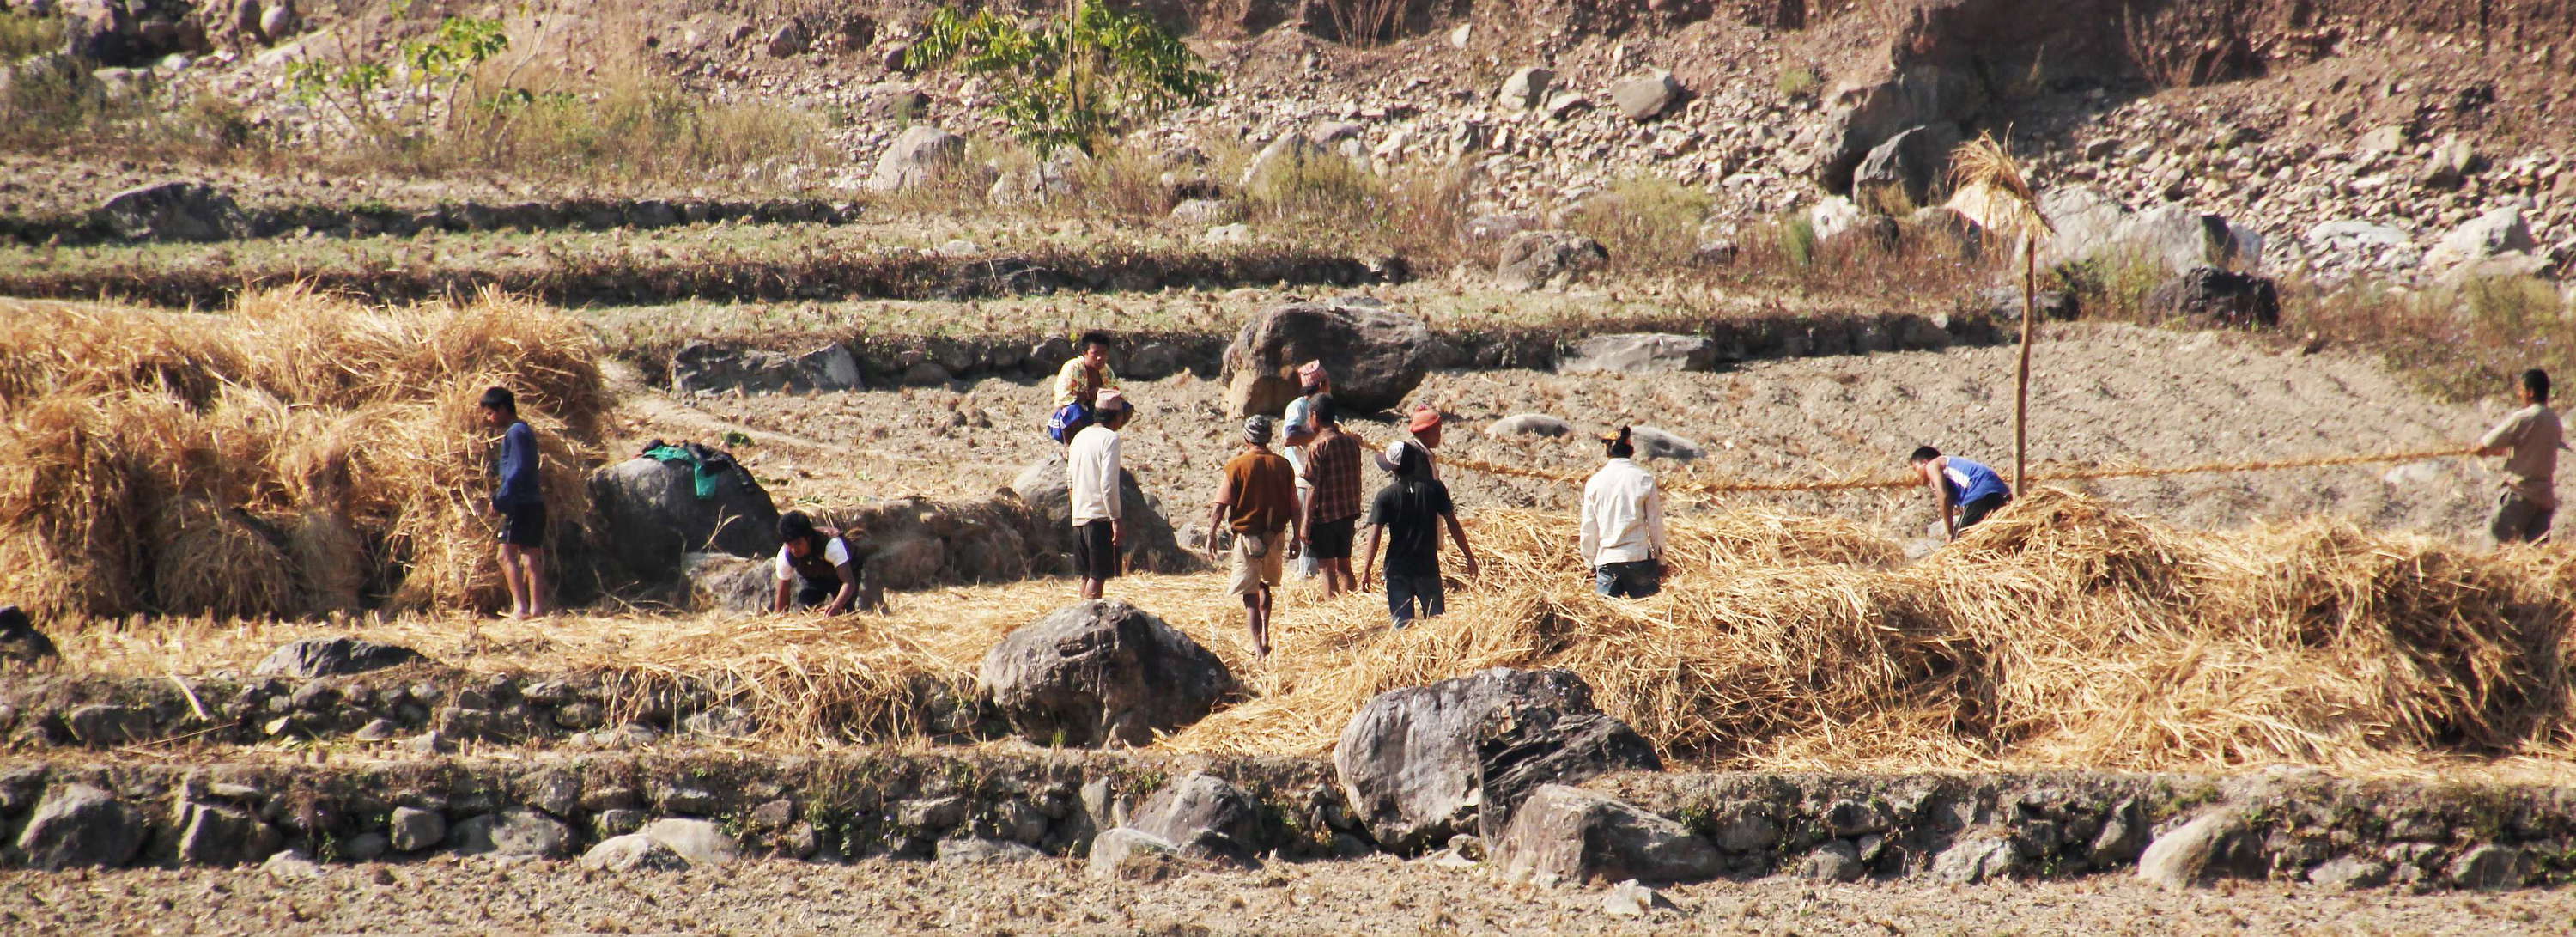 Lesser Himalaya  |  Traditional farming